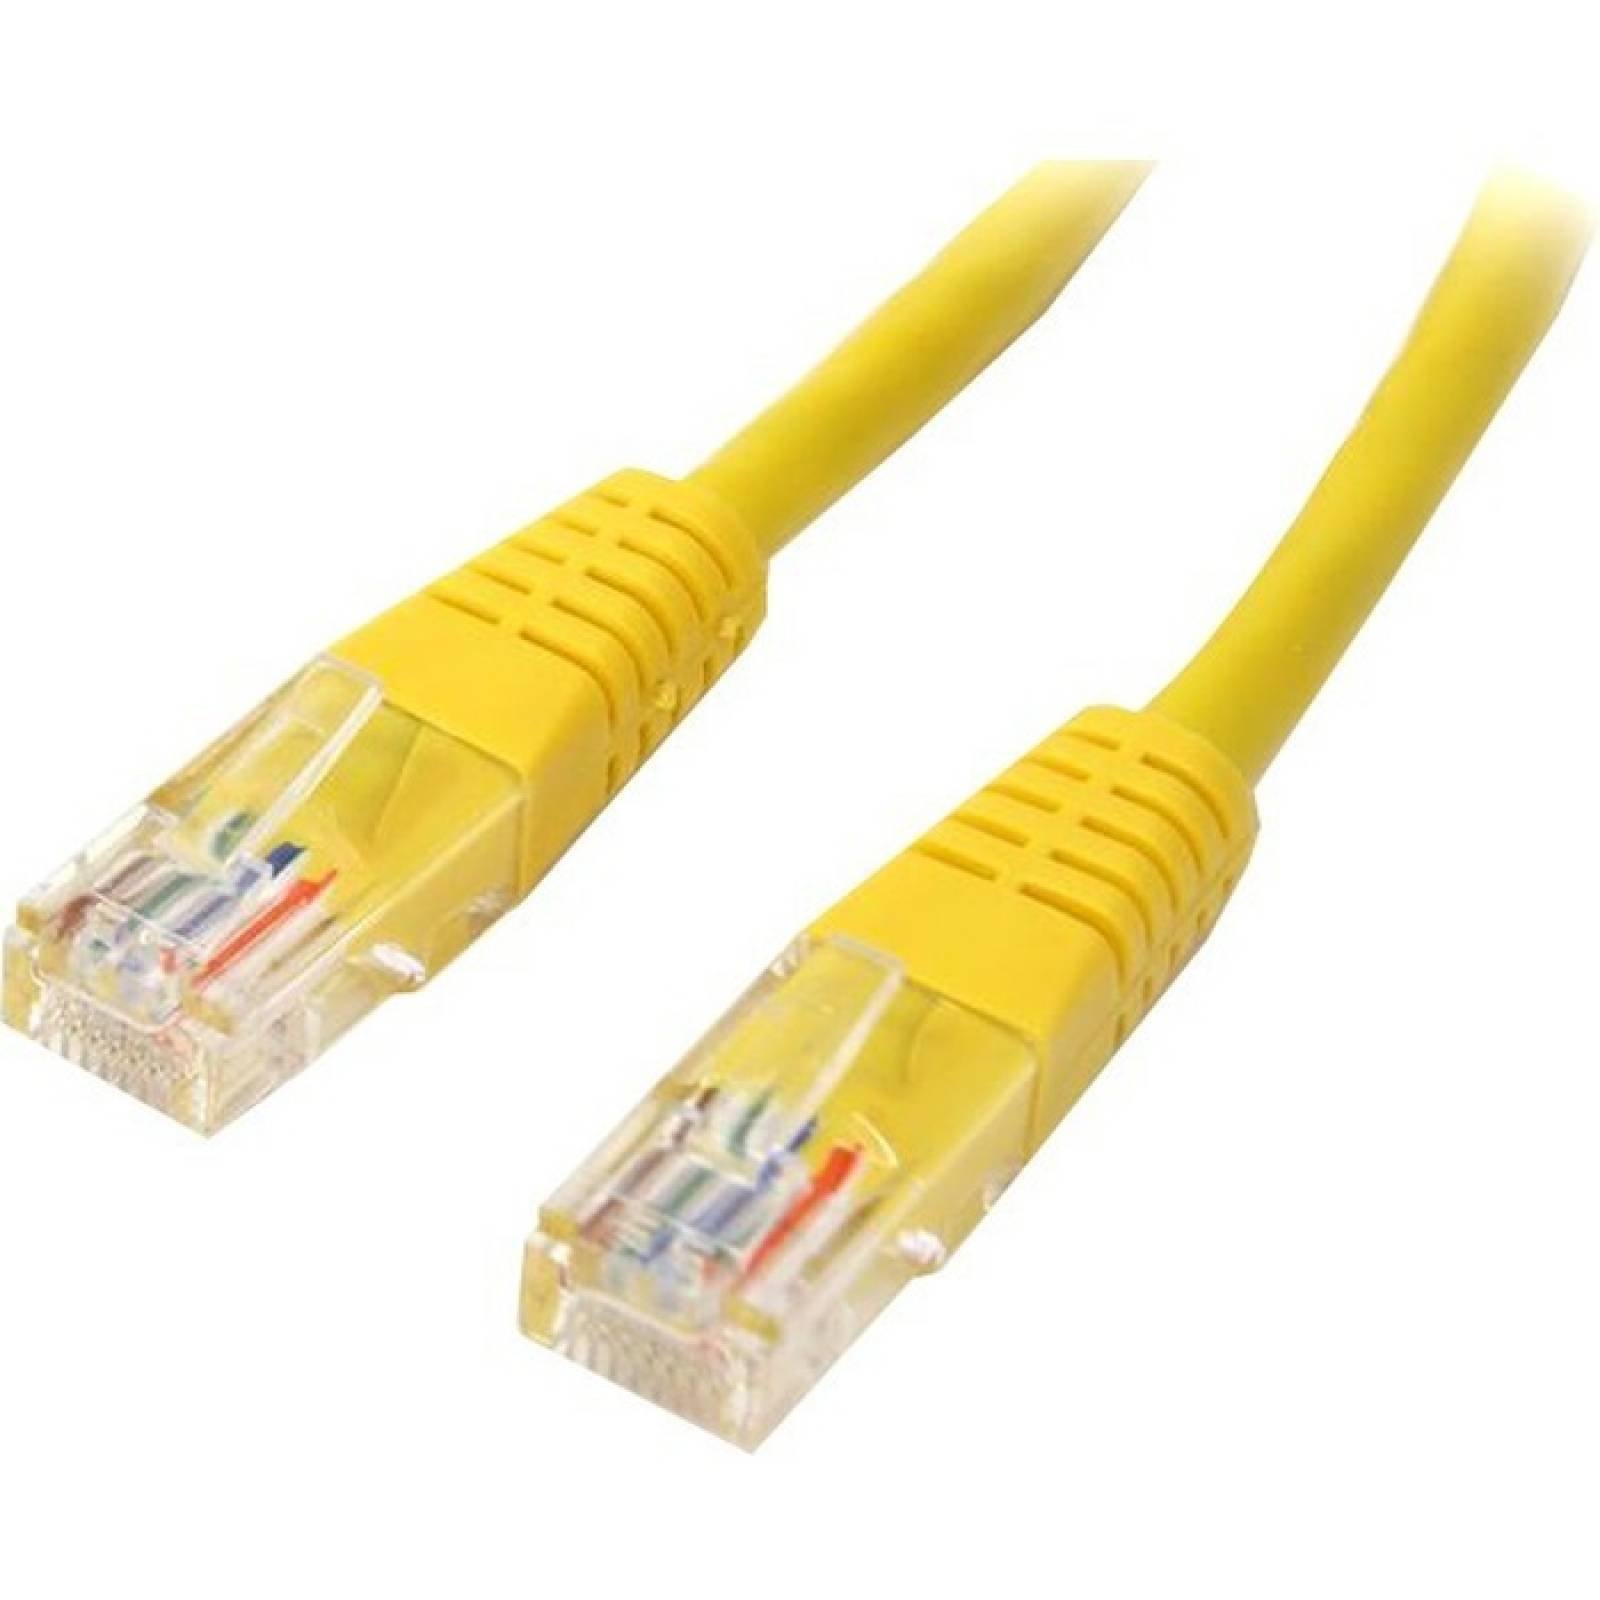 StarTechcom Cable de conexin UTP Cat5e amarillo moldeado de 15 pies